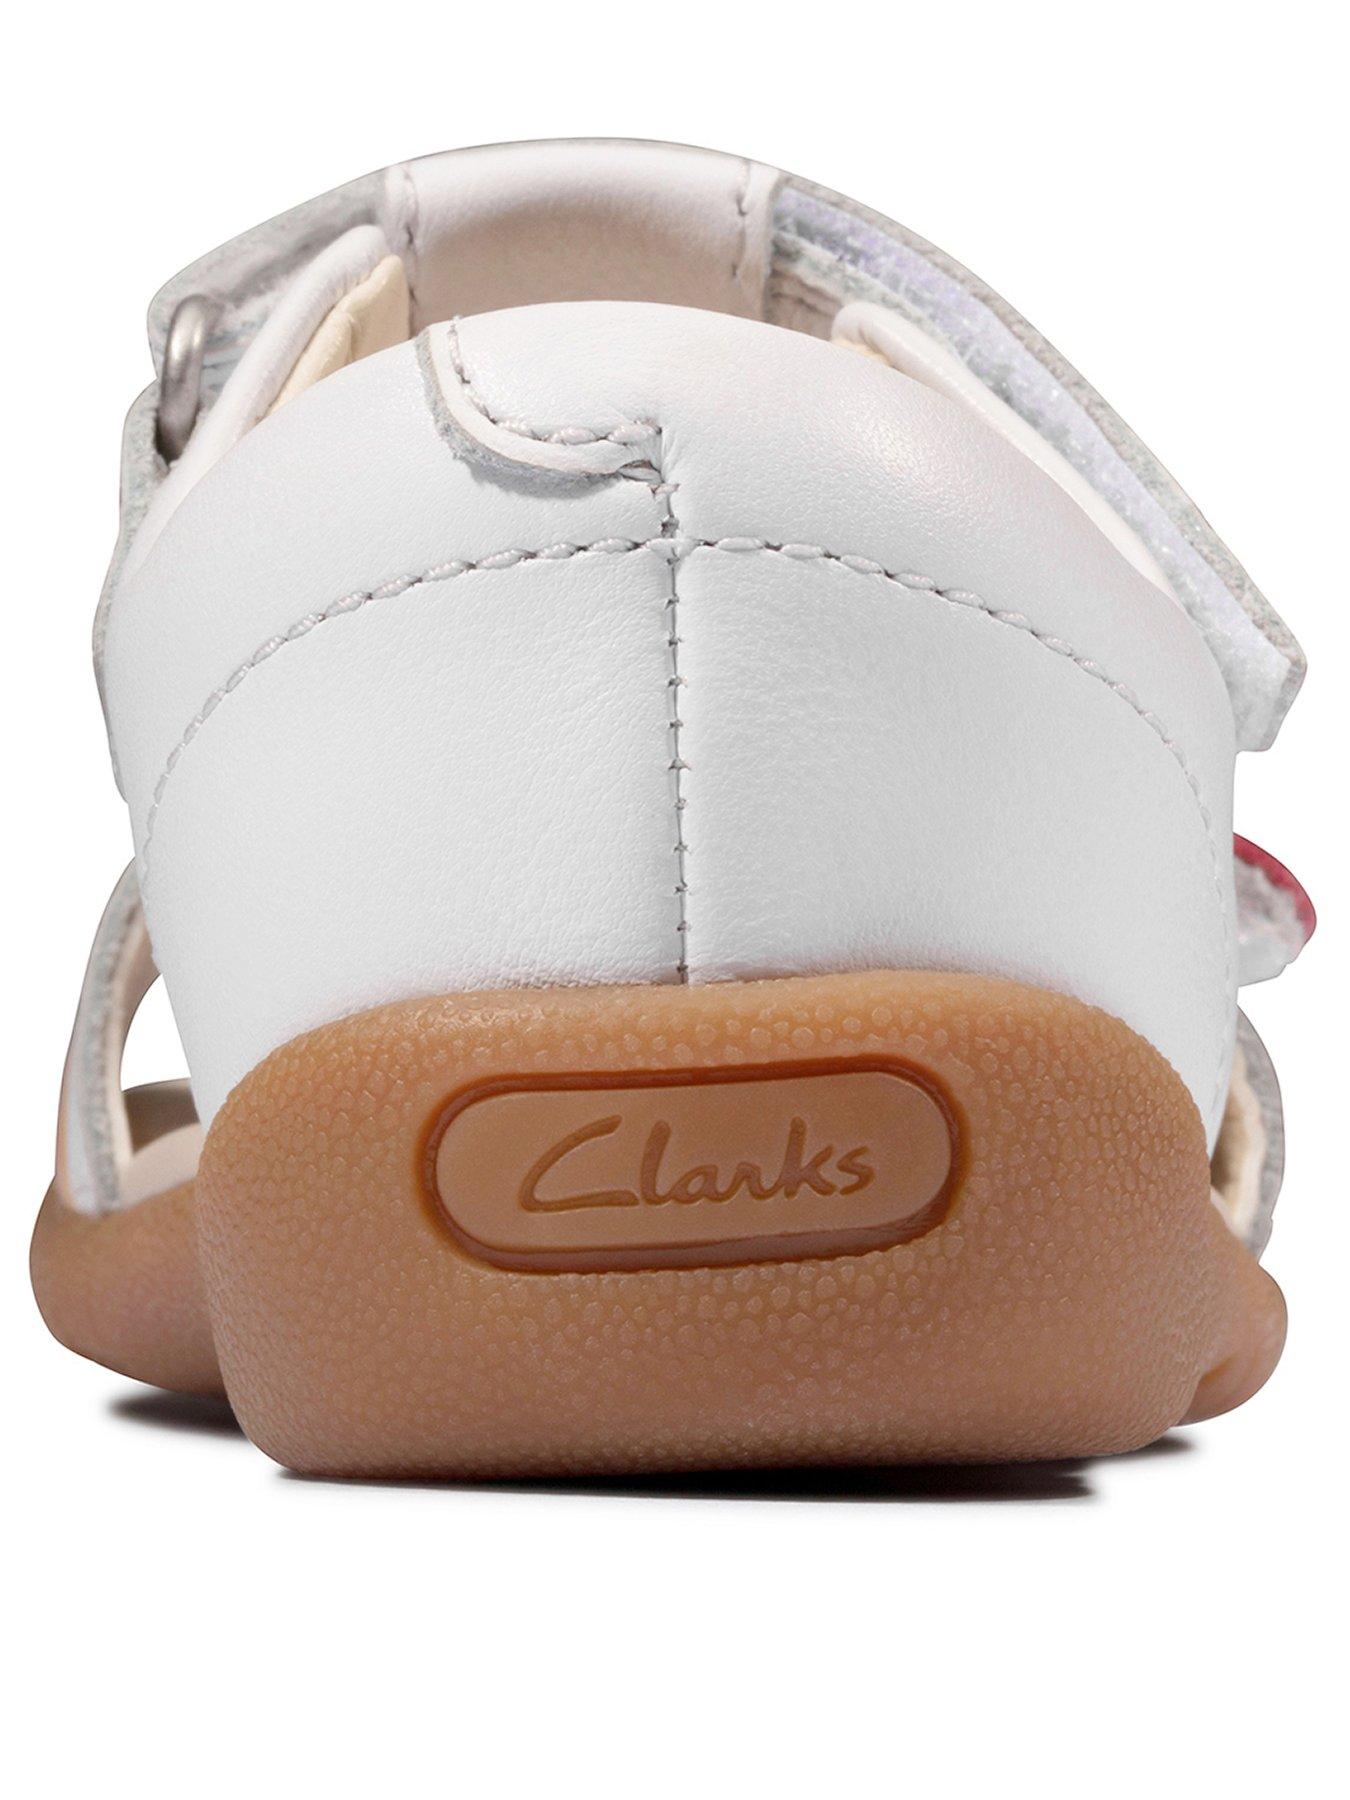 clarks sandals toddler girl